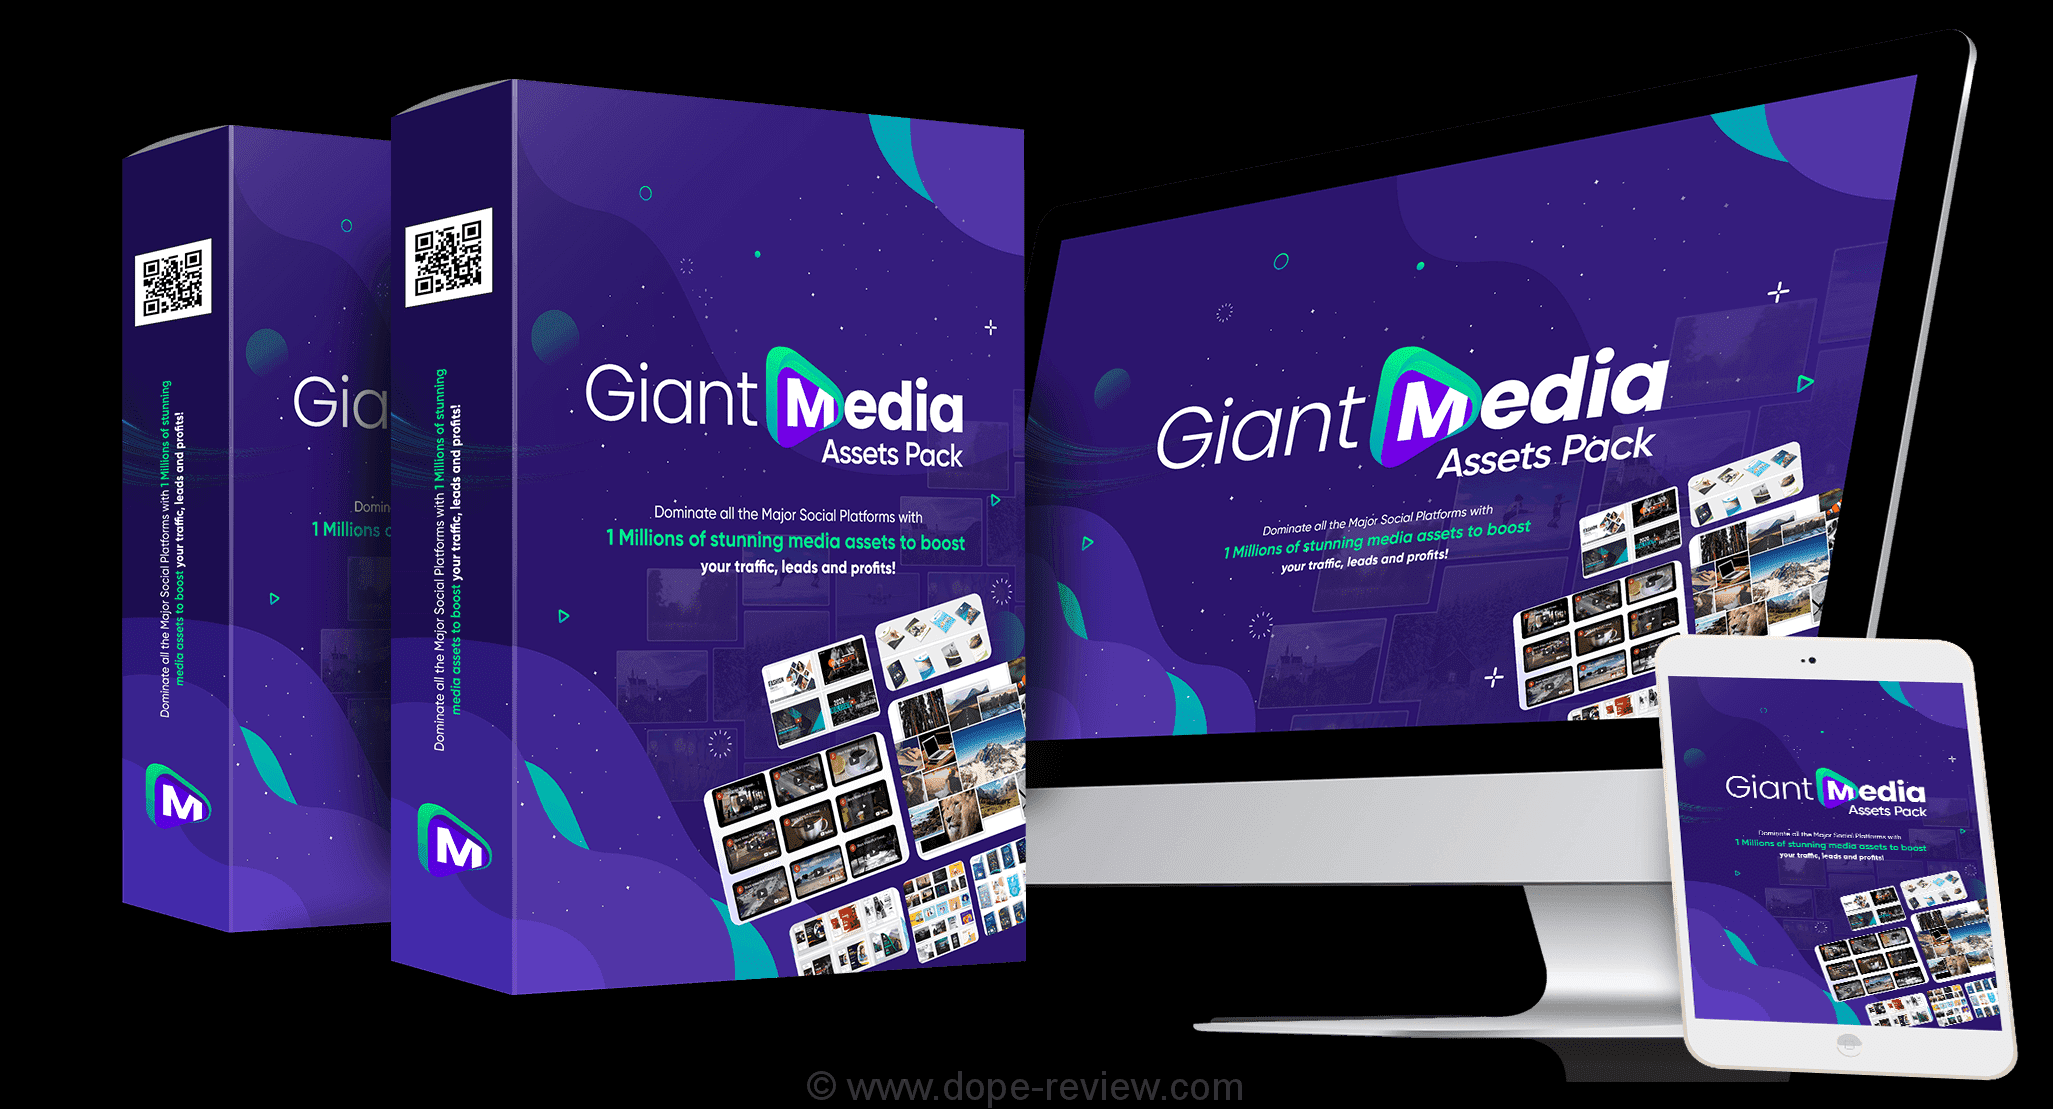 Giant Media Assets Pack